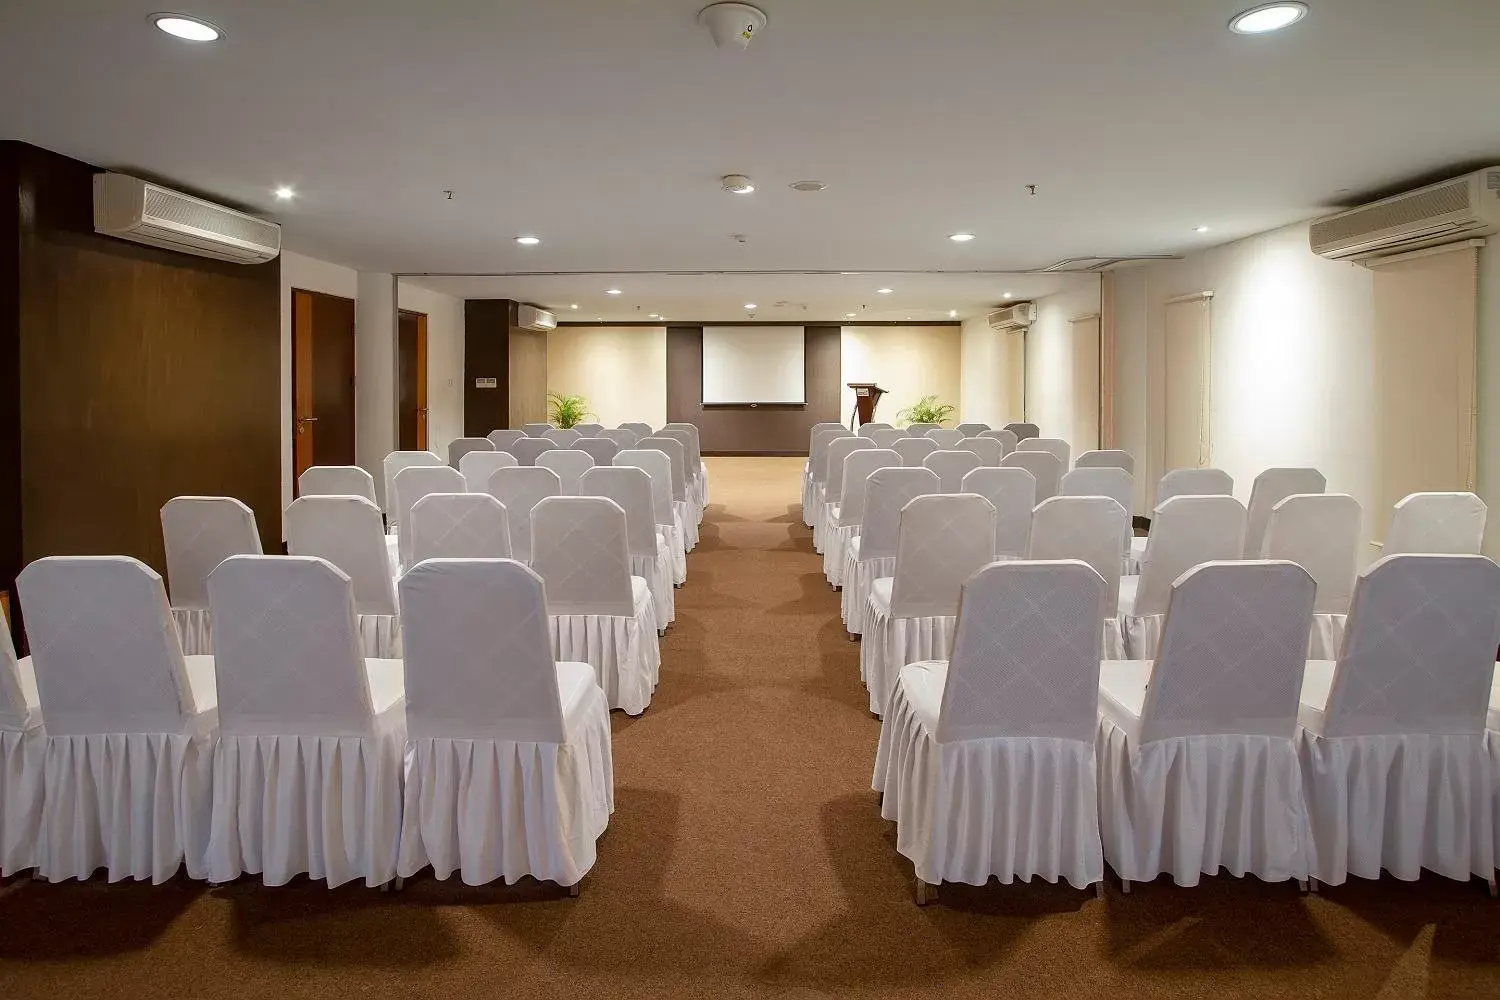 Meeting/conference room in PrimeBiz Hotel Kuta